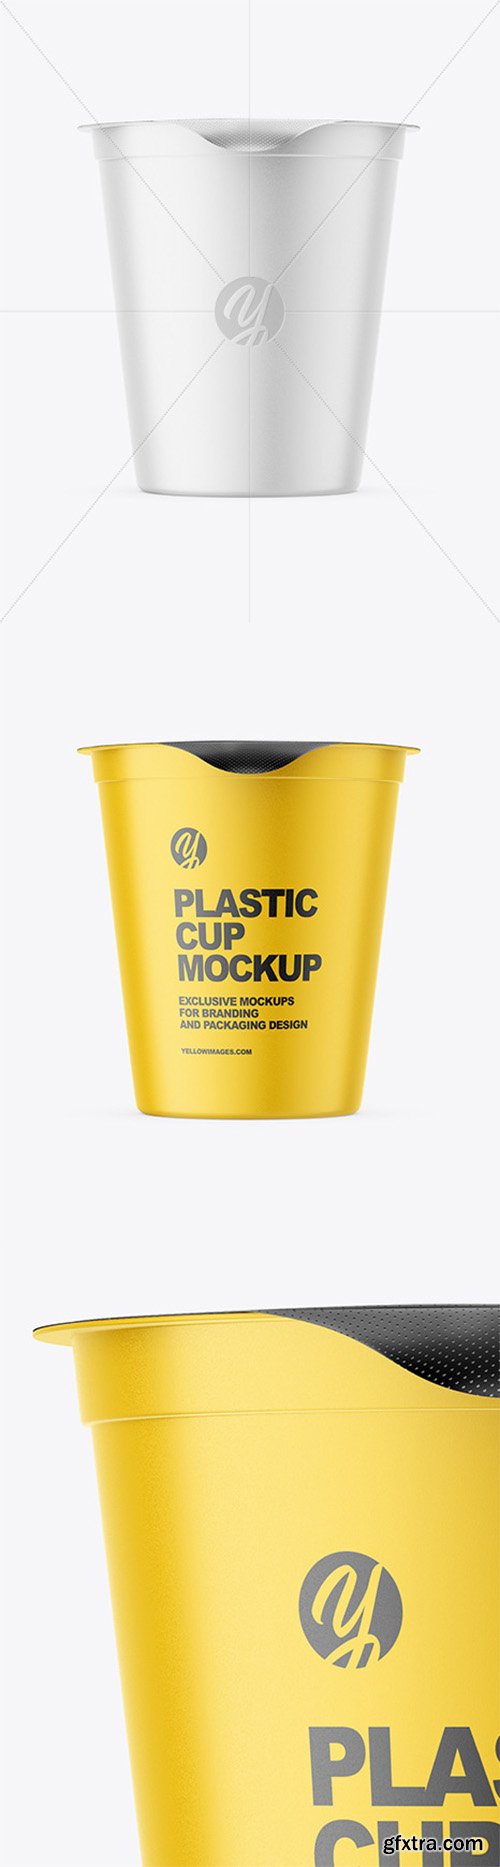 Download 40 Mockup Plastic Box Potoshop Yellowimages Mockups